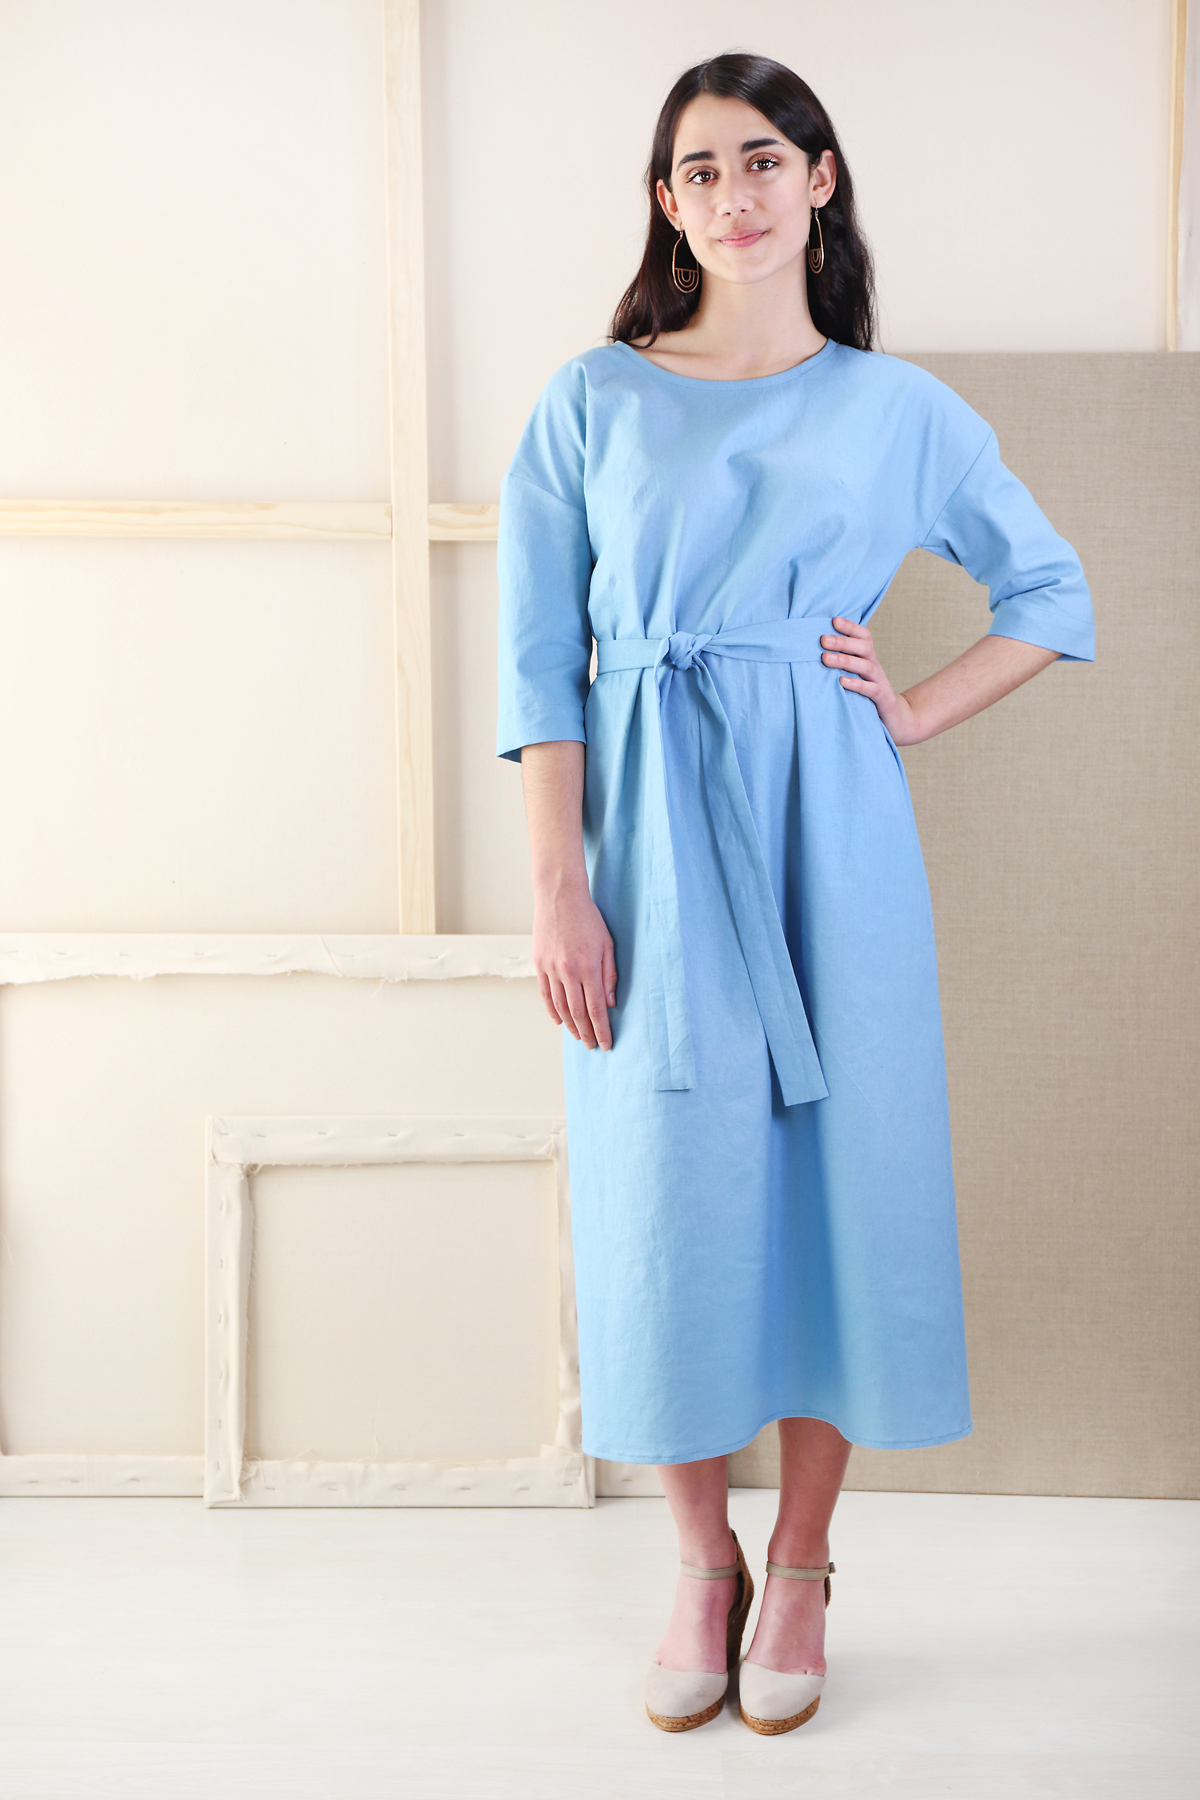 Introducing the Liesl + Co. Terrace Dress Sewing Pattern | Blog ...